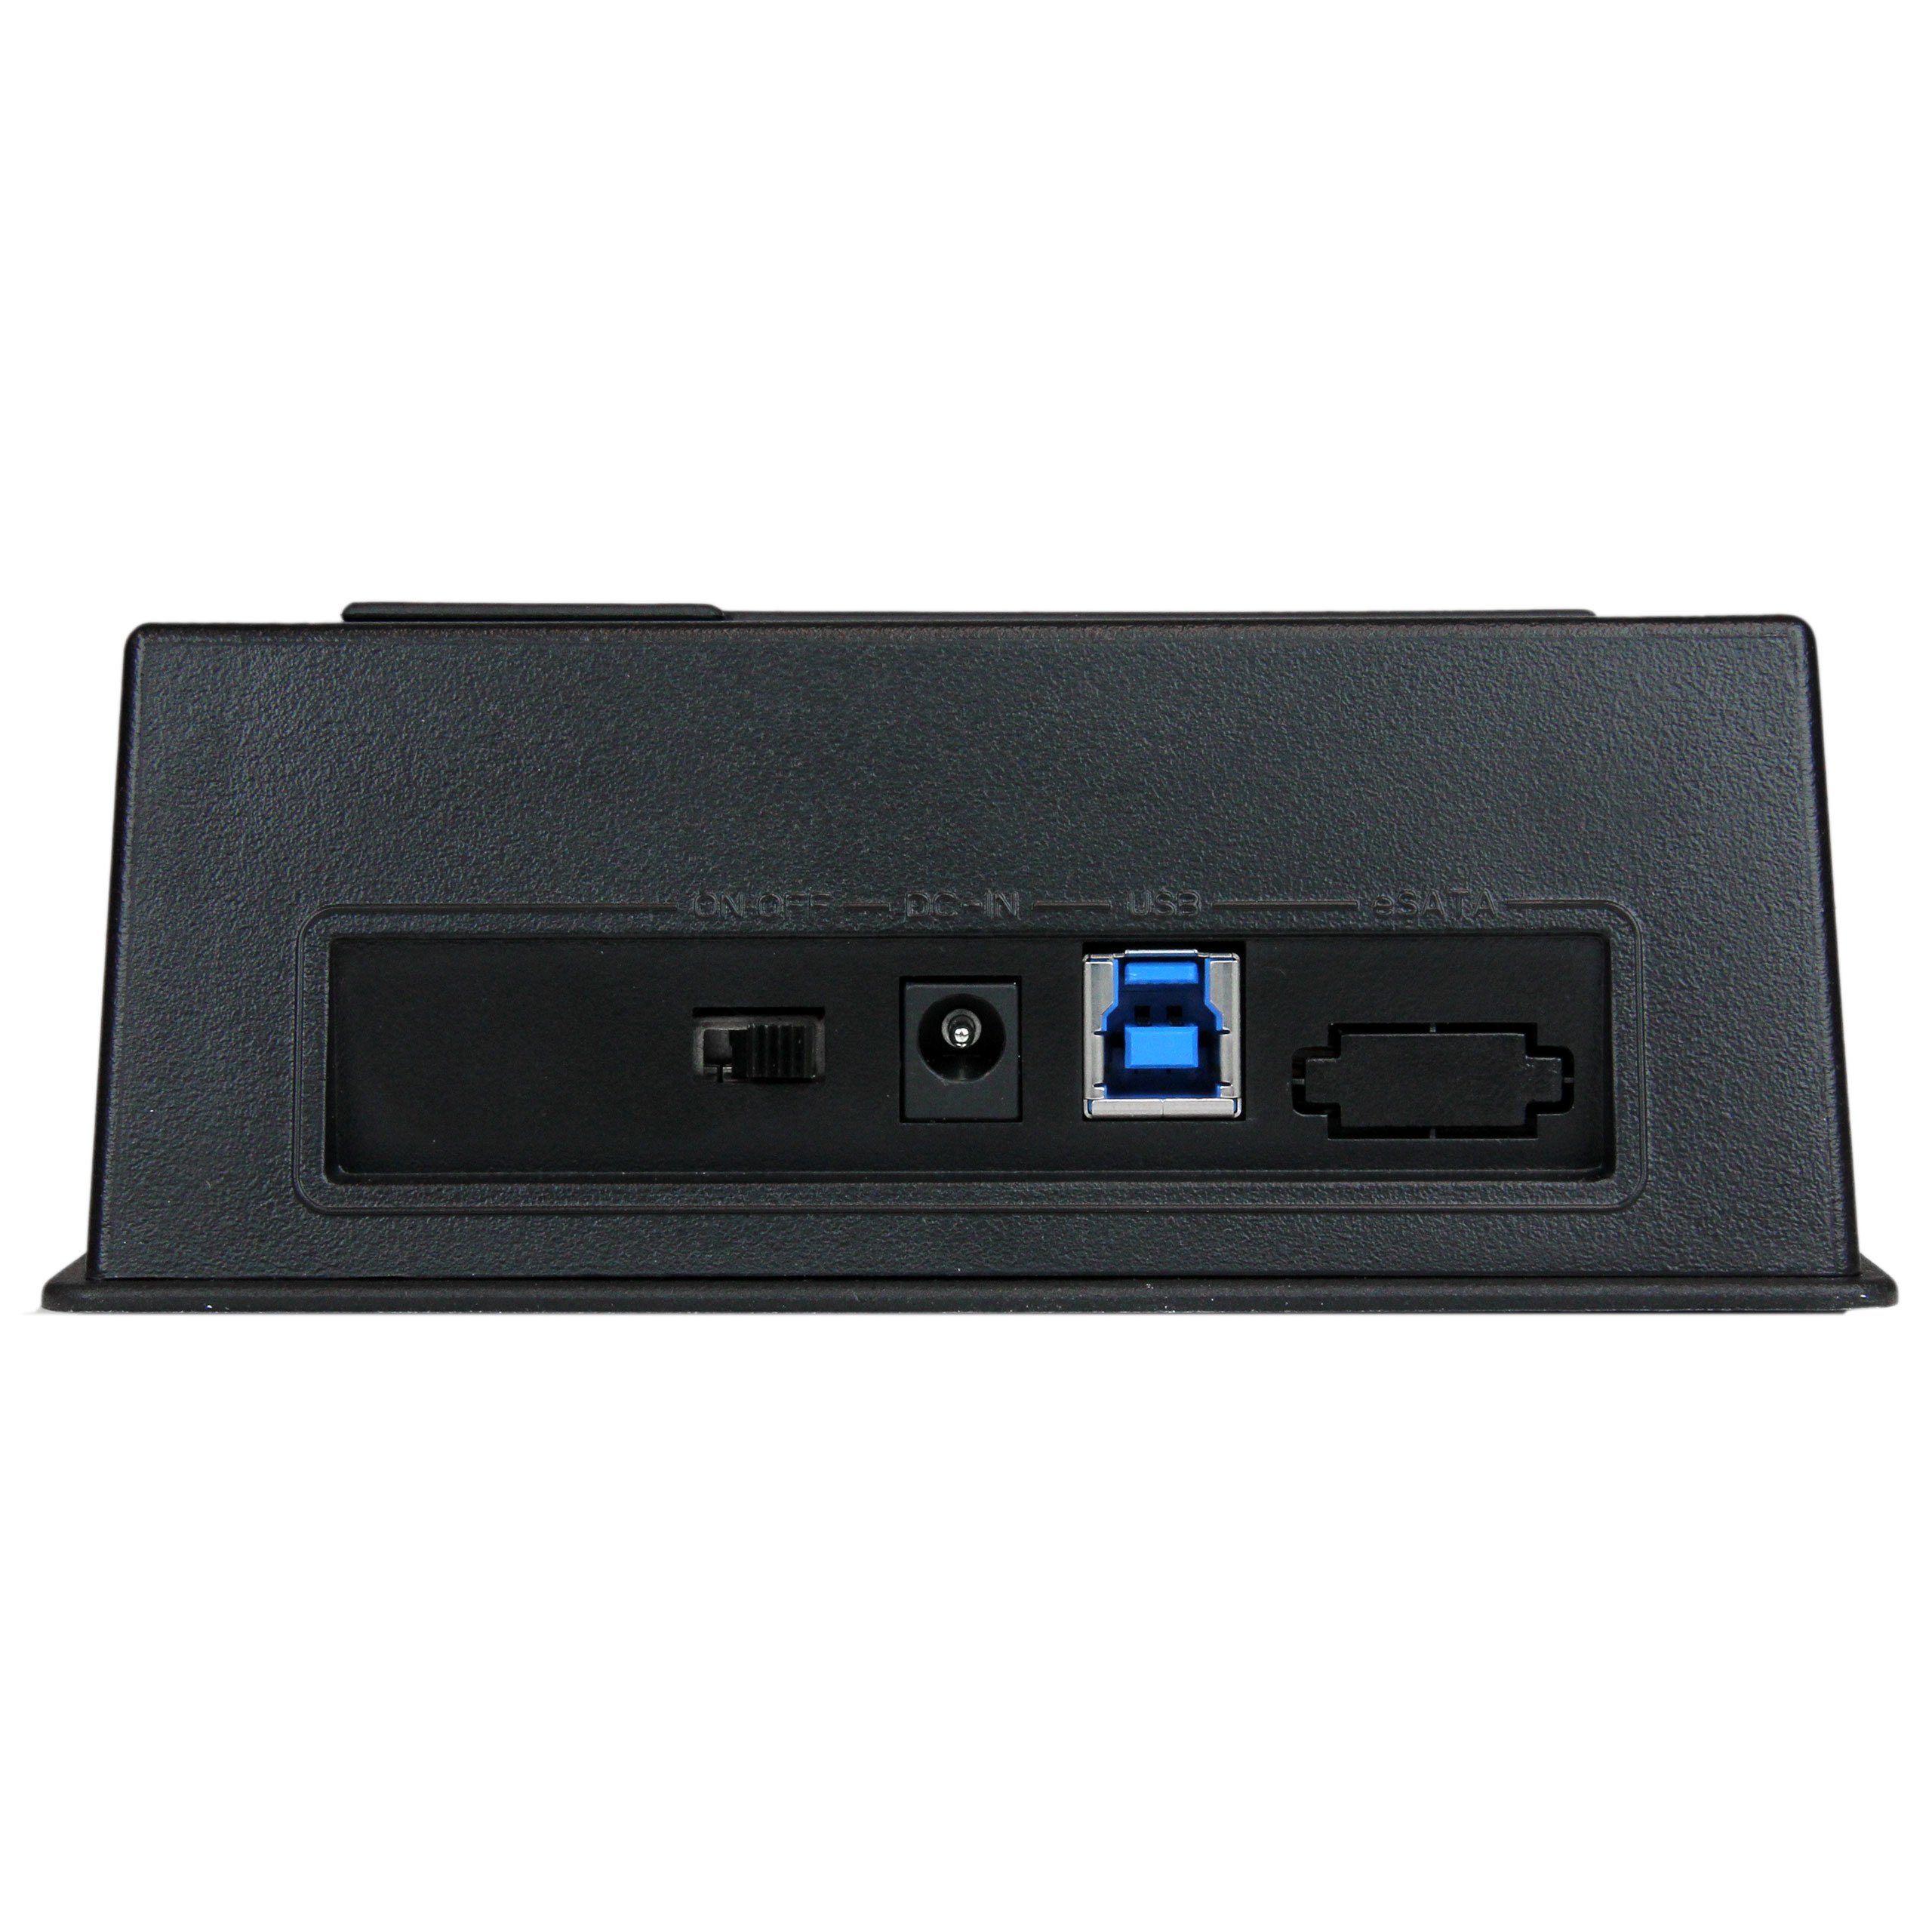 StarTech.com Single Bay USB 3.0 to SATA Hard Drive Docking Station, USB 3.0 (5 Gbps) Hard Drive Dock, External 2.5/3.5